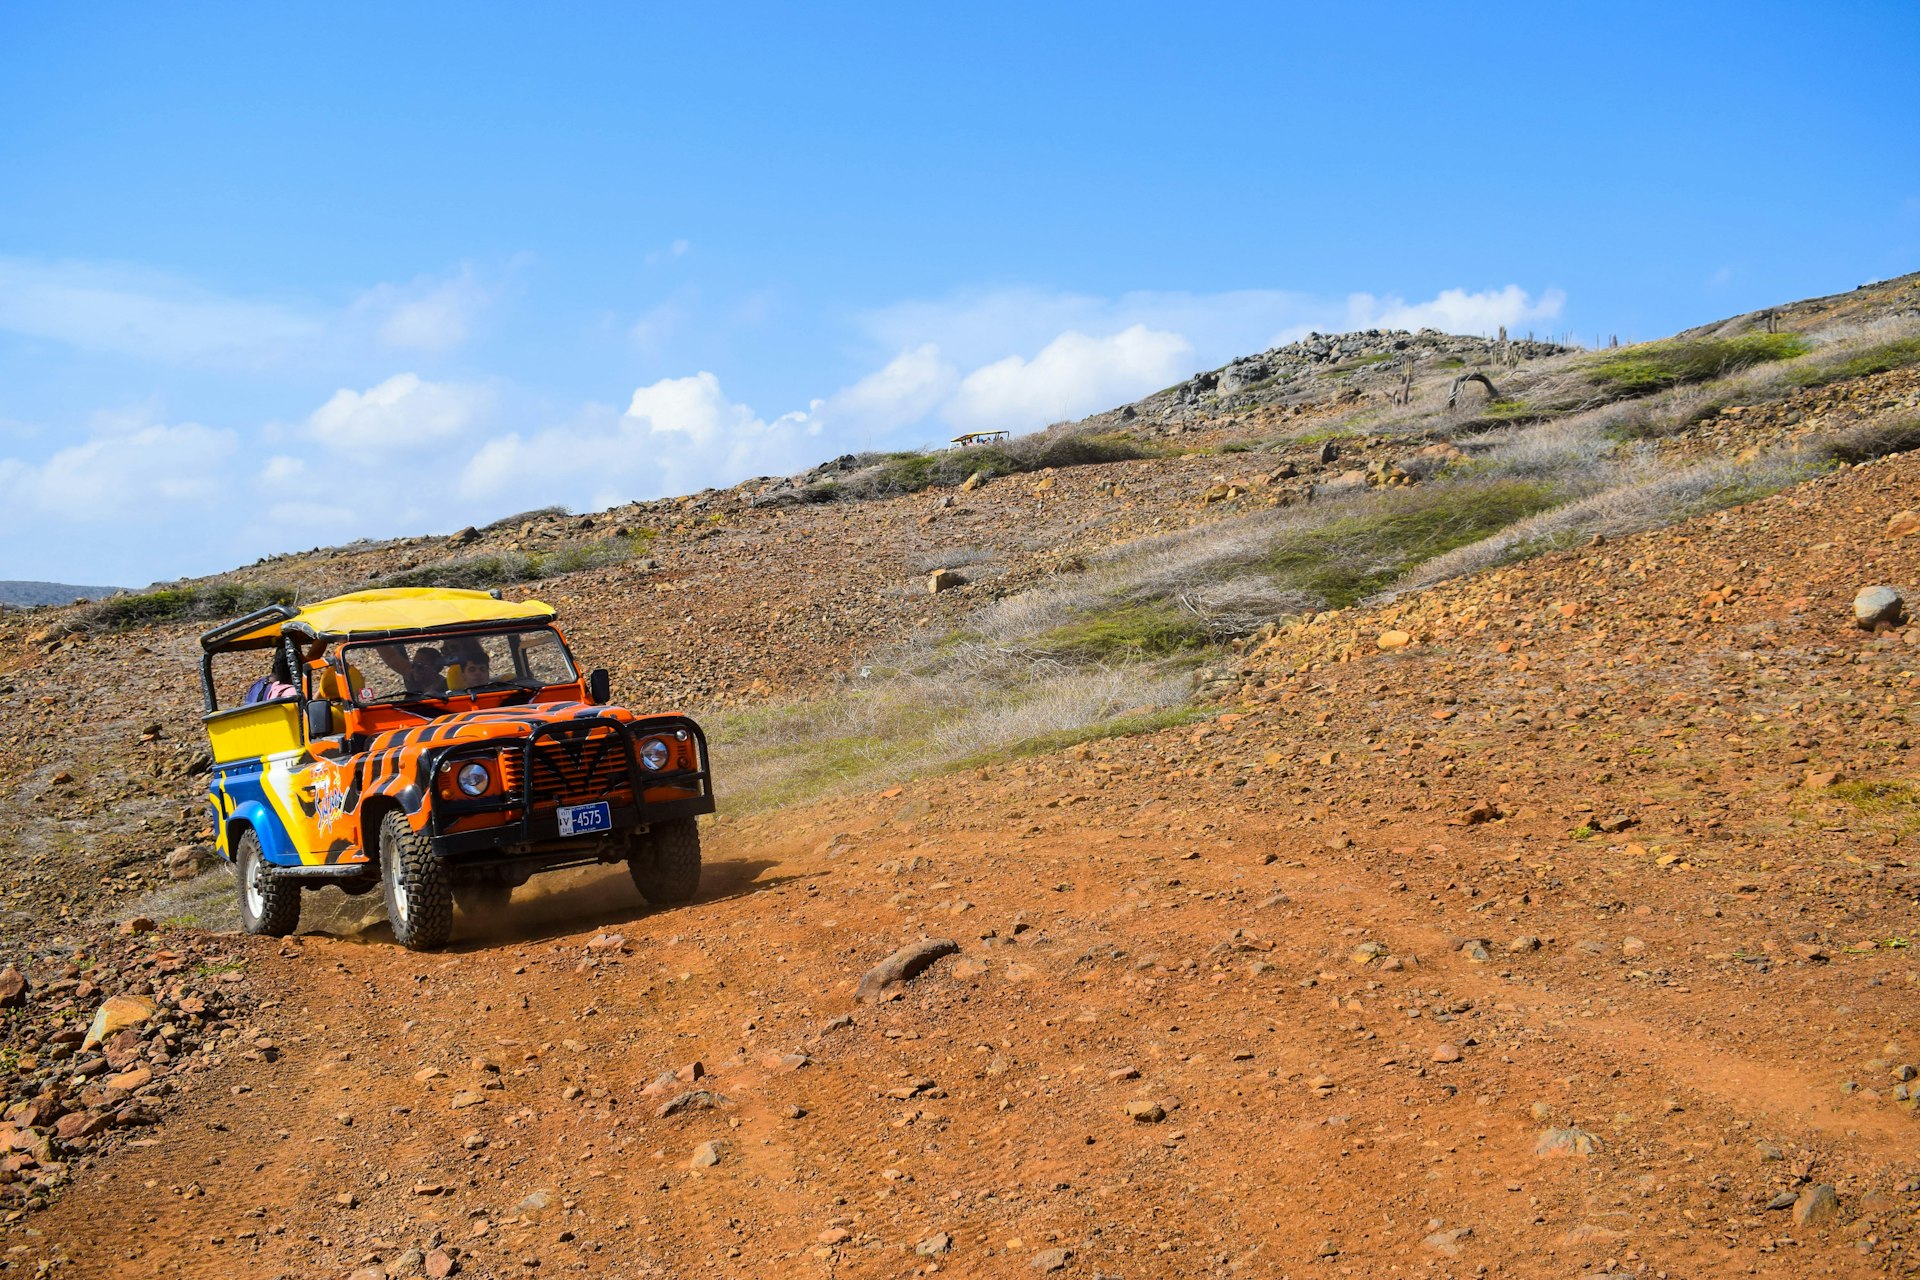 A jeep in the desert-like terrain at Arikok National Park in Aruba